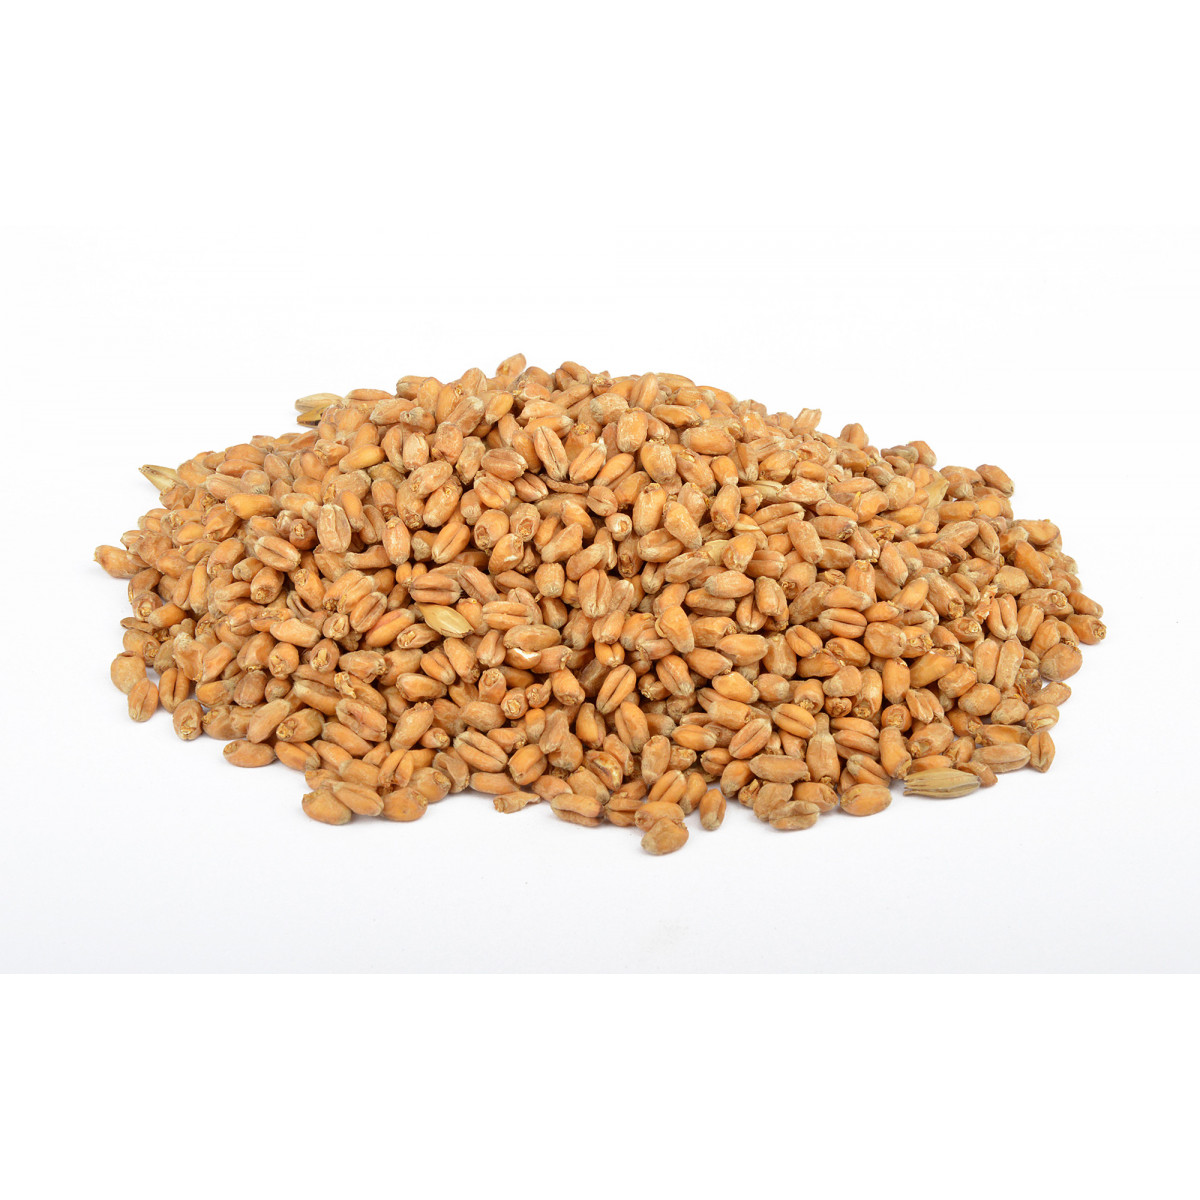 Weyermann® oak smoked wheat malt 4-6 EBC 25 kg